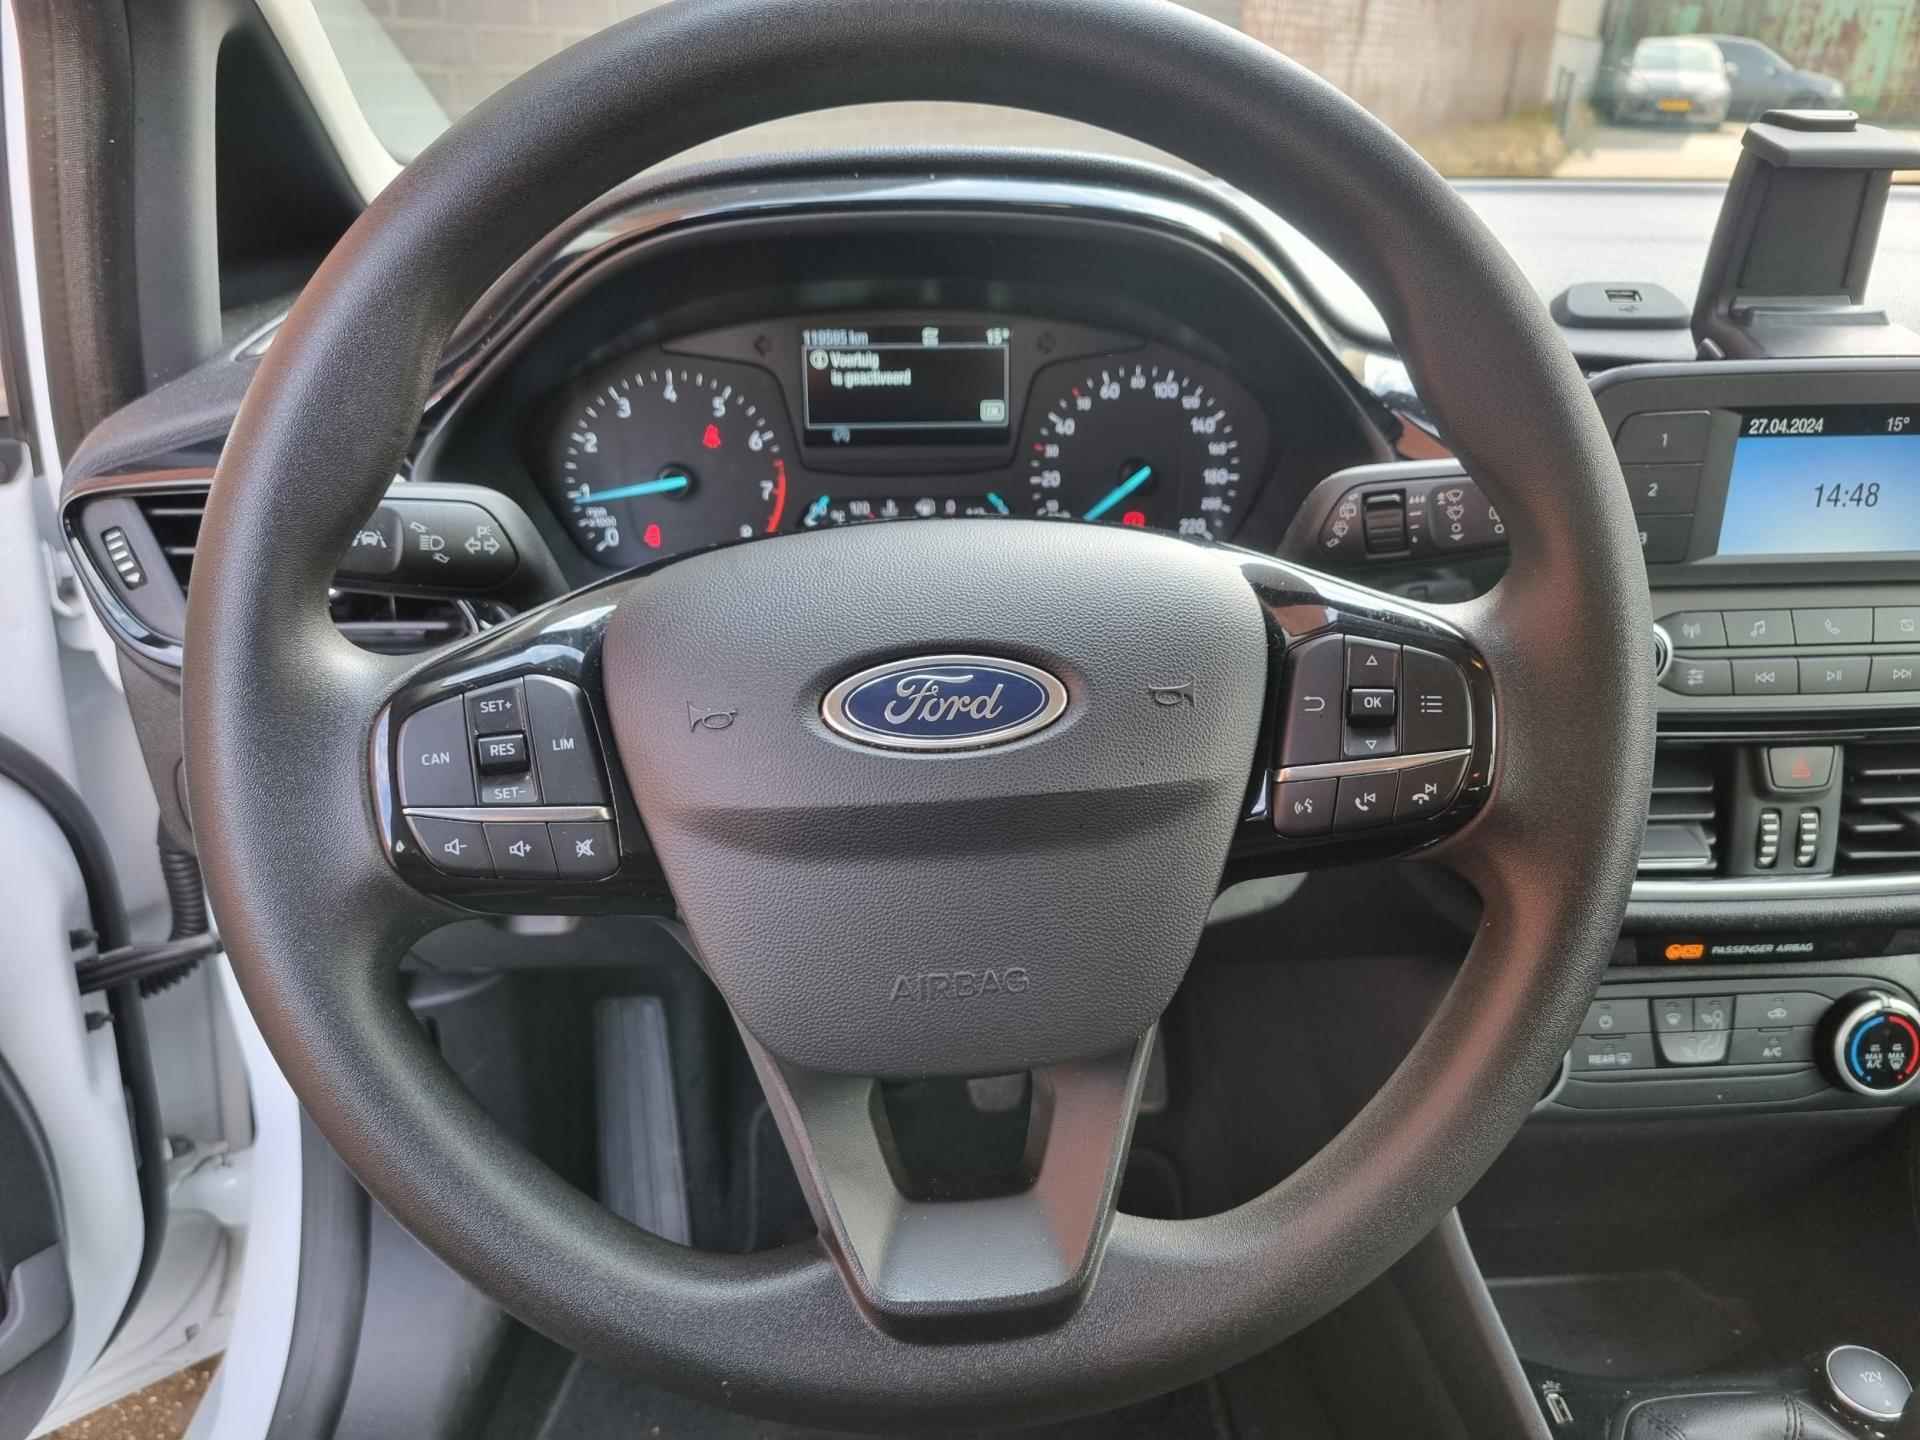 Ford Fiesta 1.1 Trend - 9/18